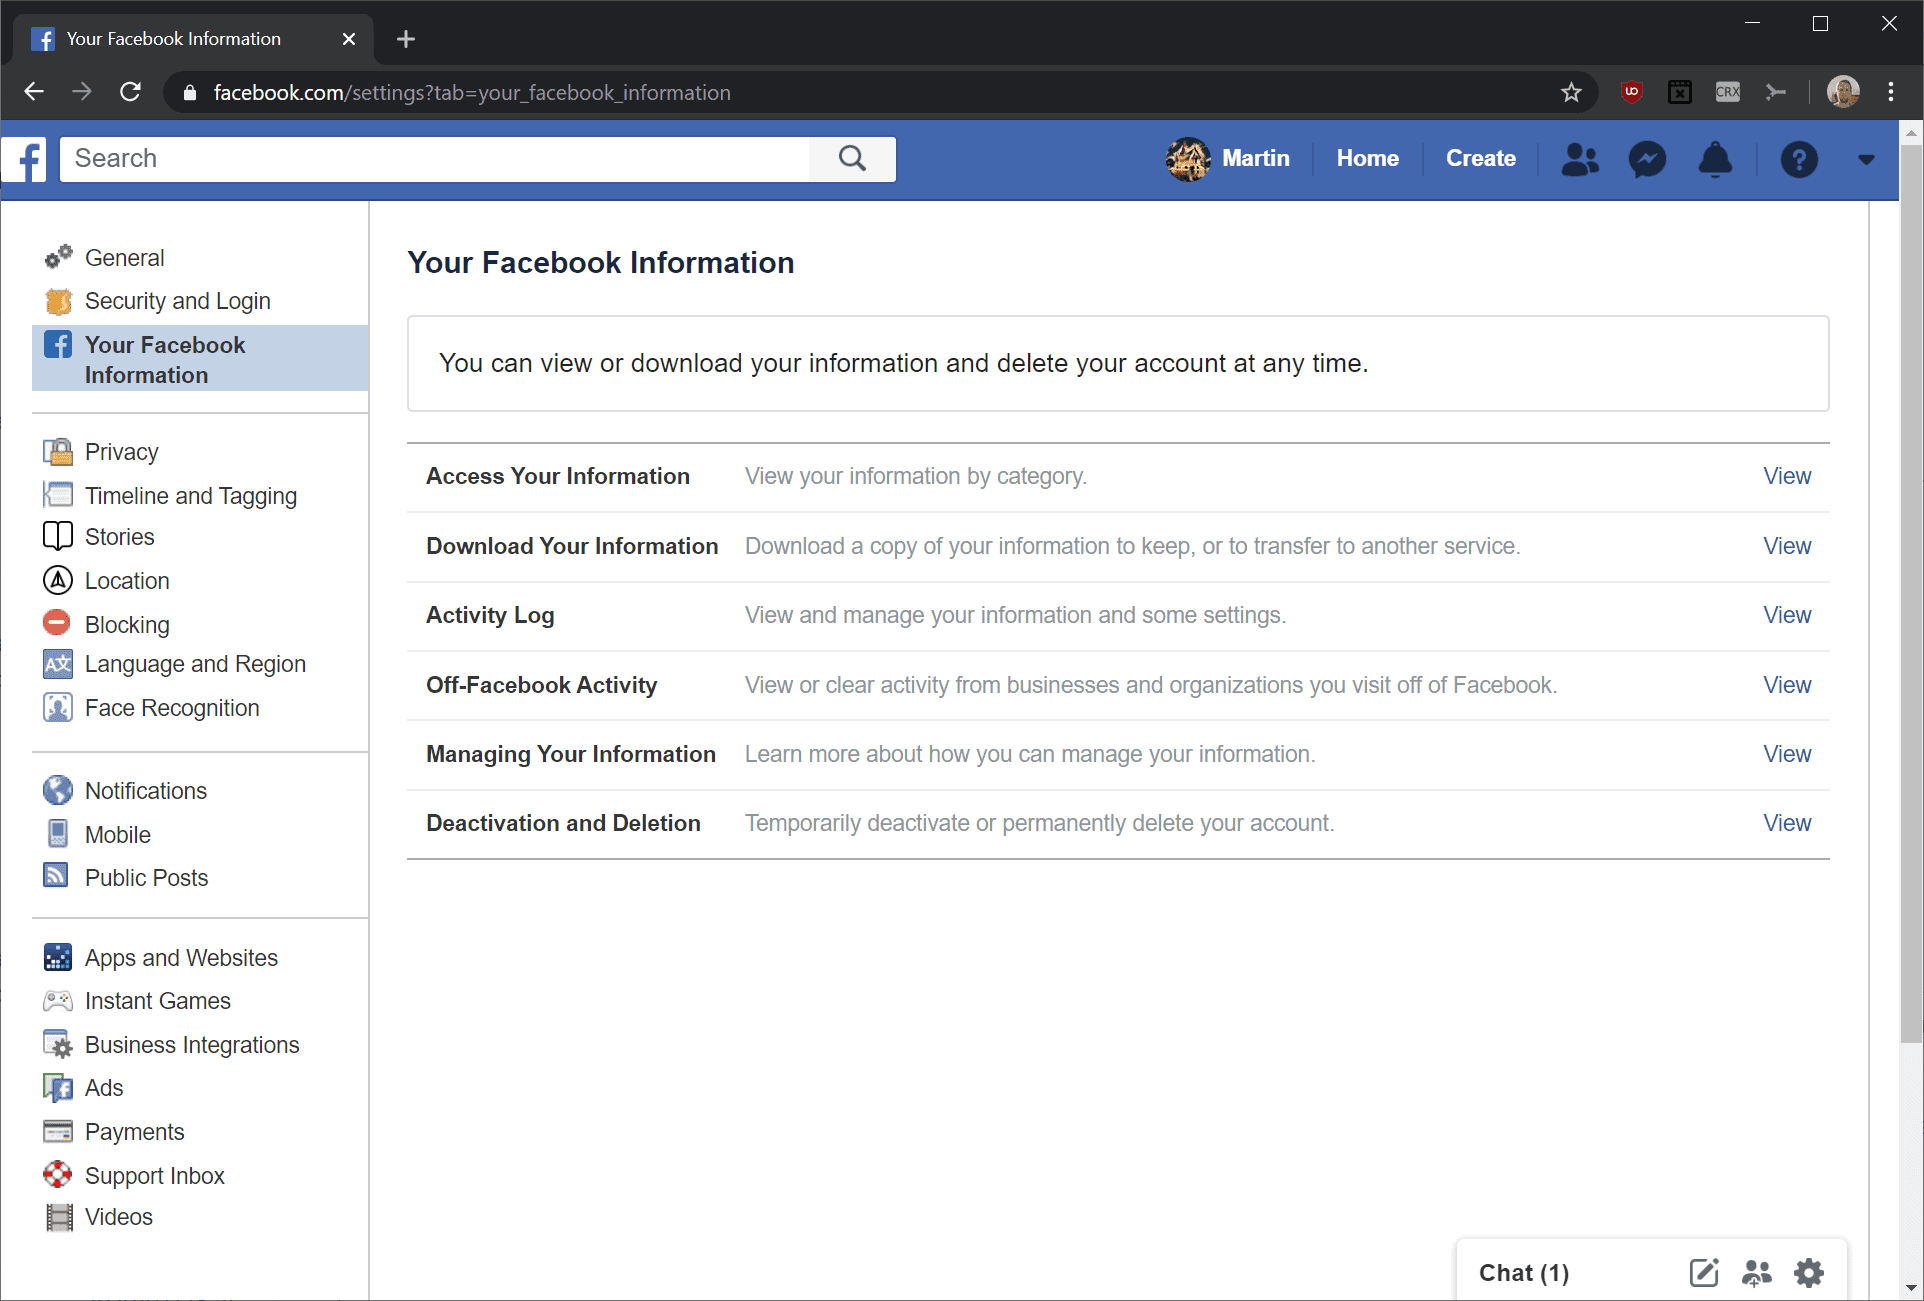 off-facebook activity